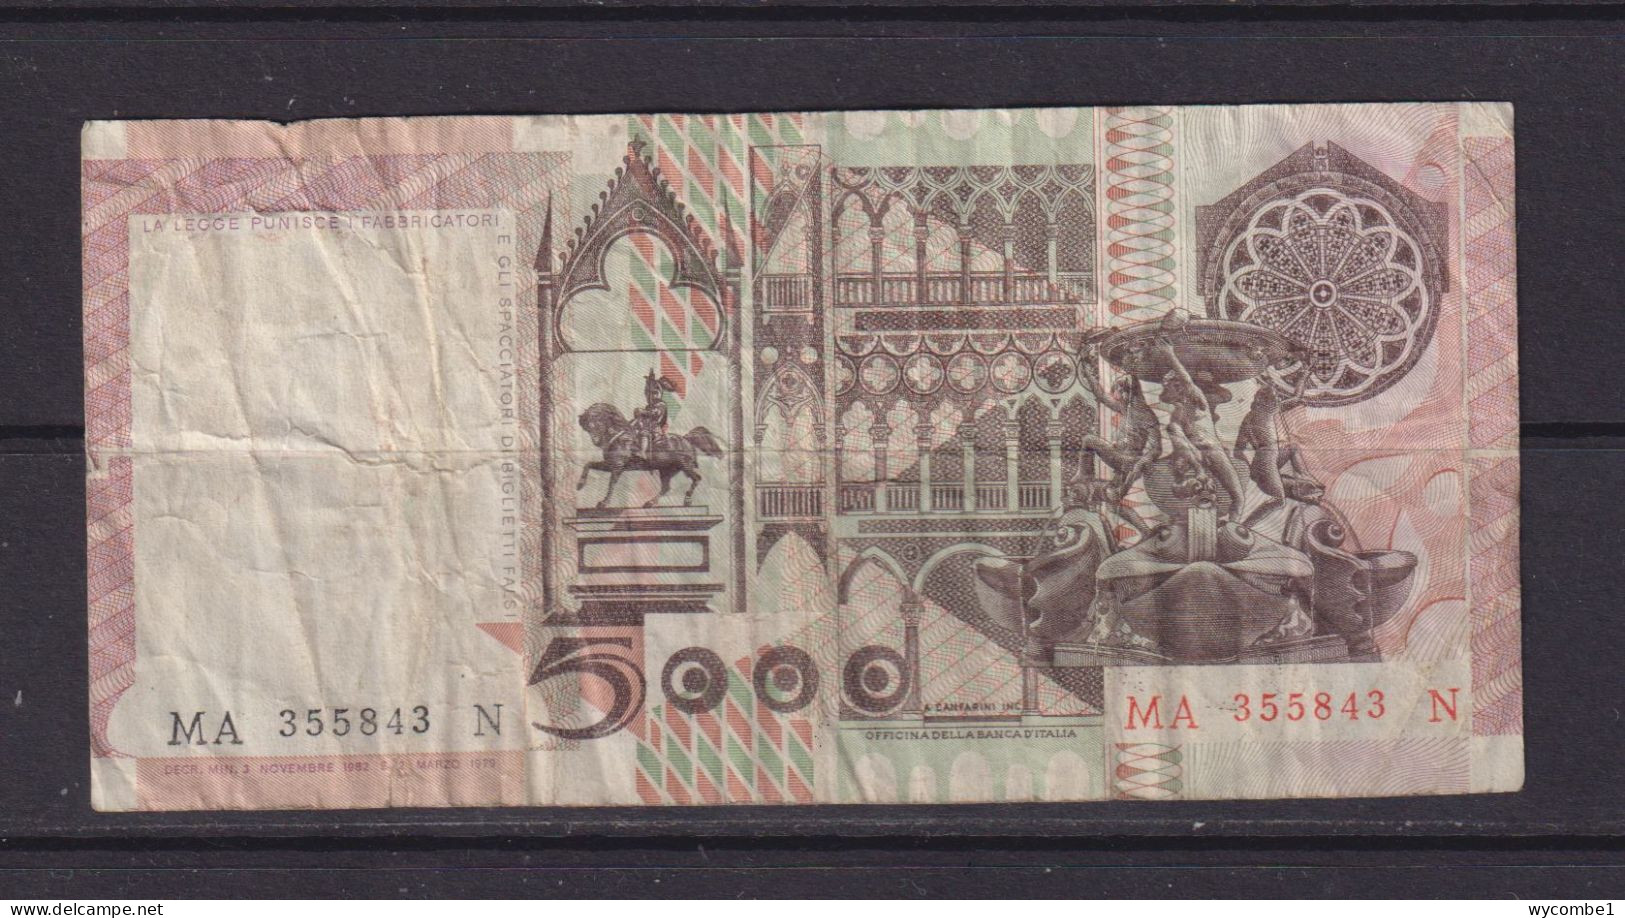 ITALY - 1979 5000 Lira Circulated Banknote - 5000 Liras